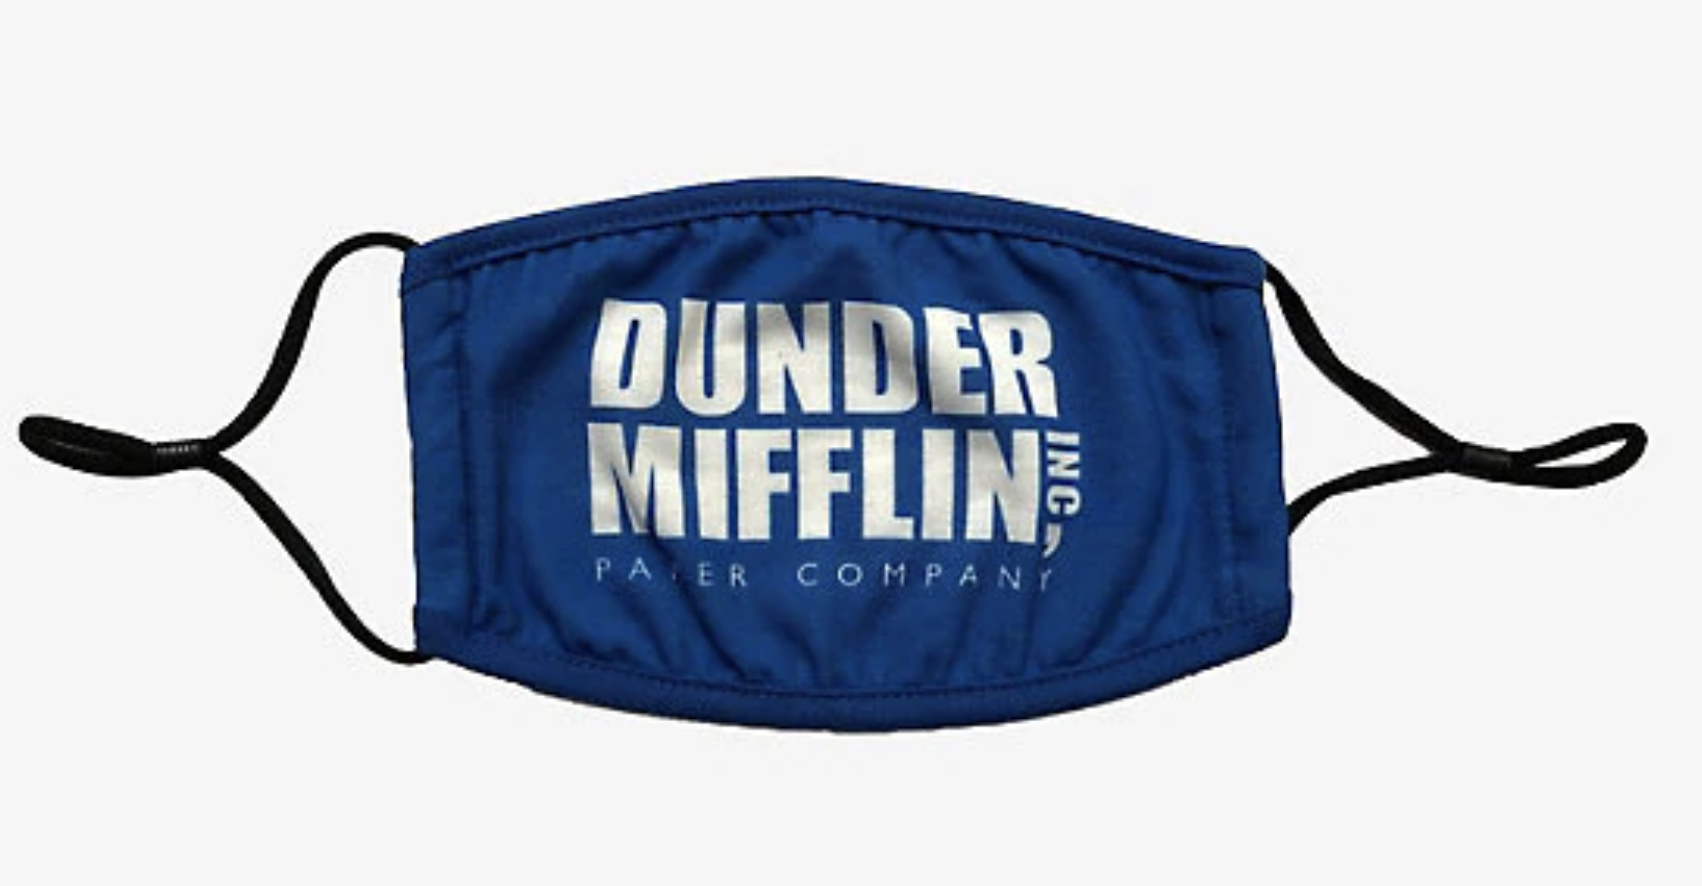 A blue face mask with the Dunder Mifflin logo 